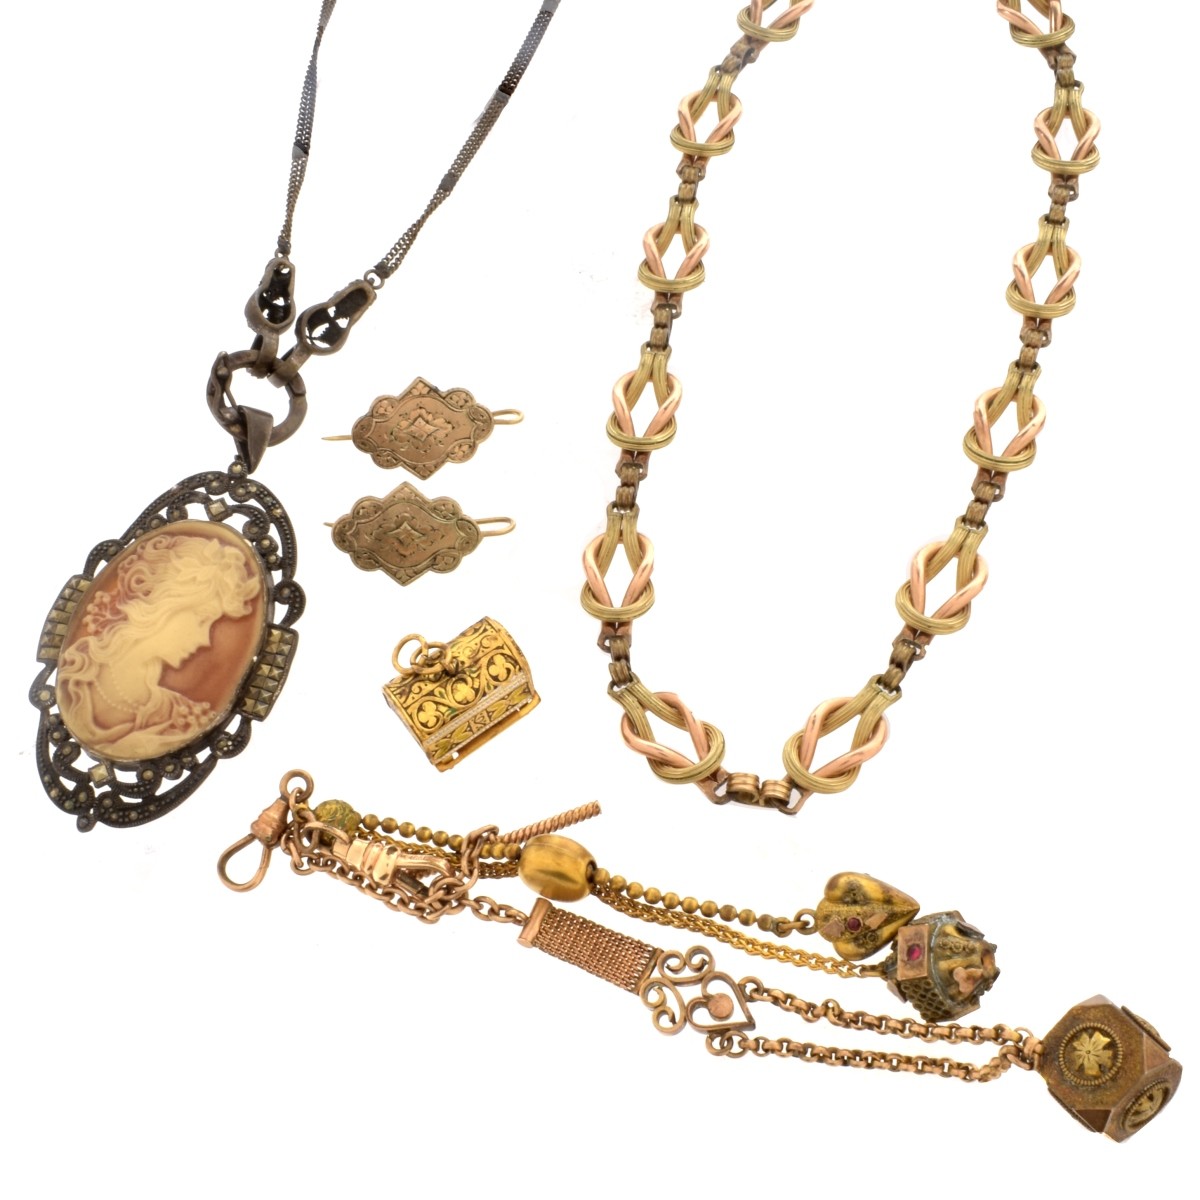 Six Piece Antique Jewelry Lot